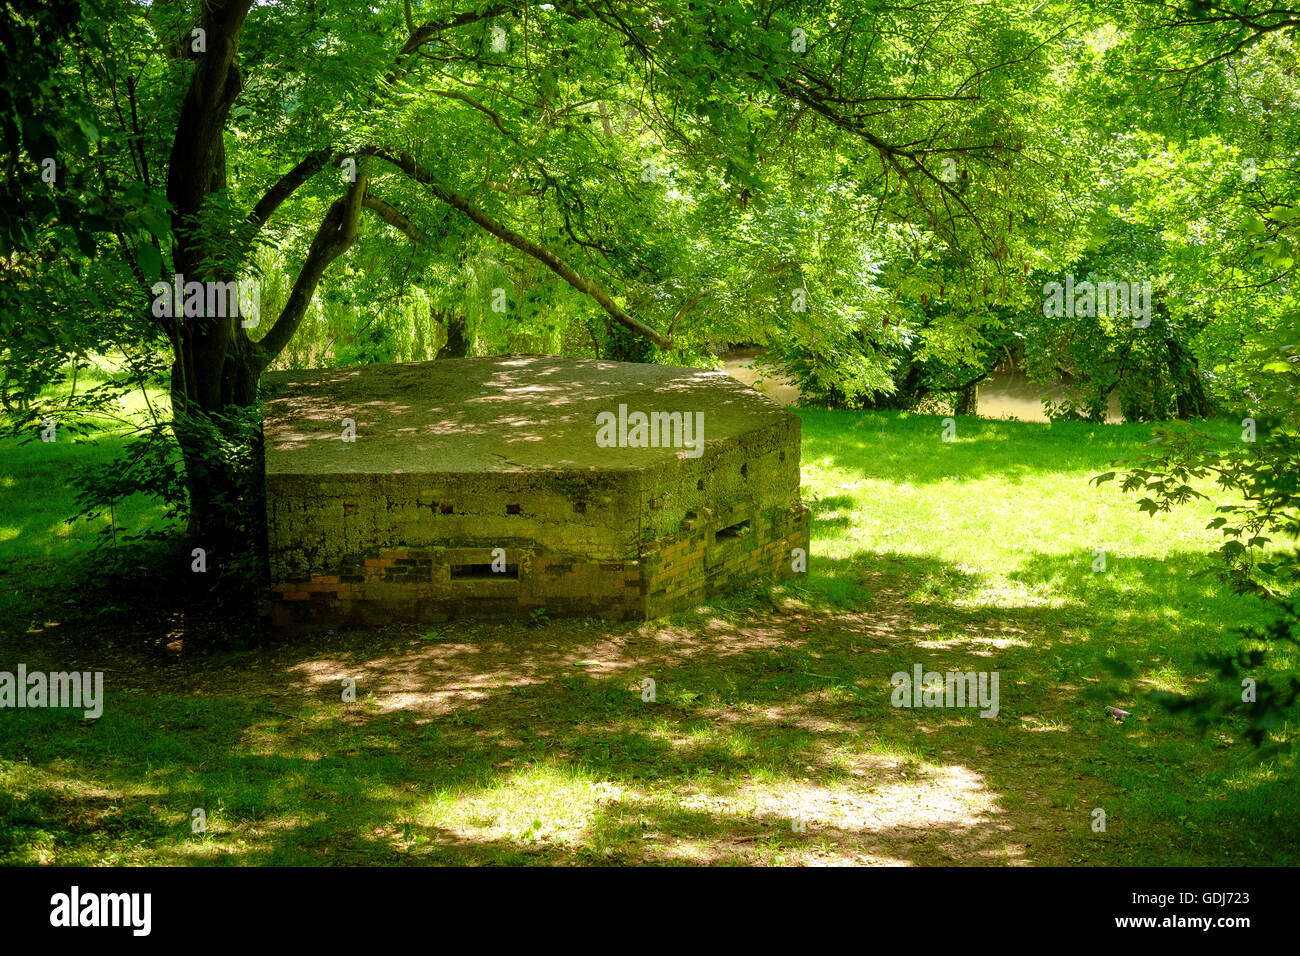 WW2 Bunker besides River Mole just outside village of Brockham, Surrey, UK Stock Photo